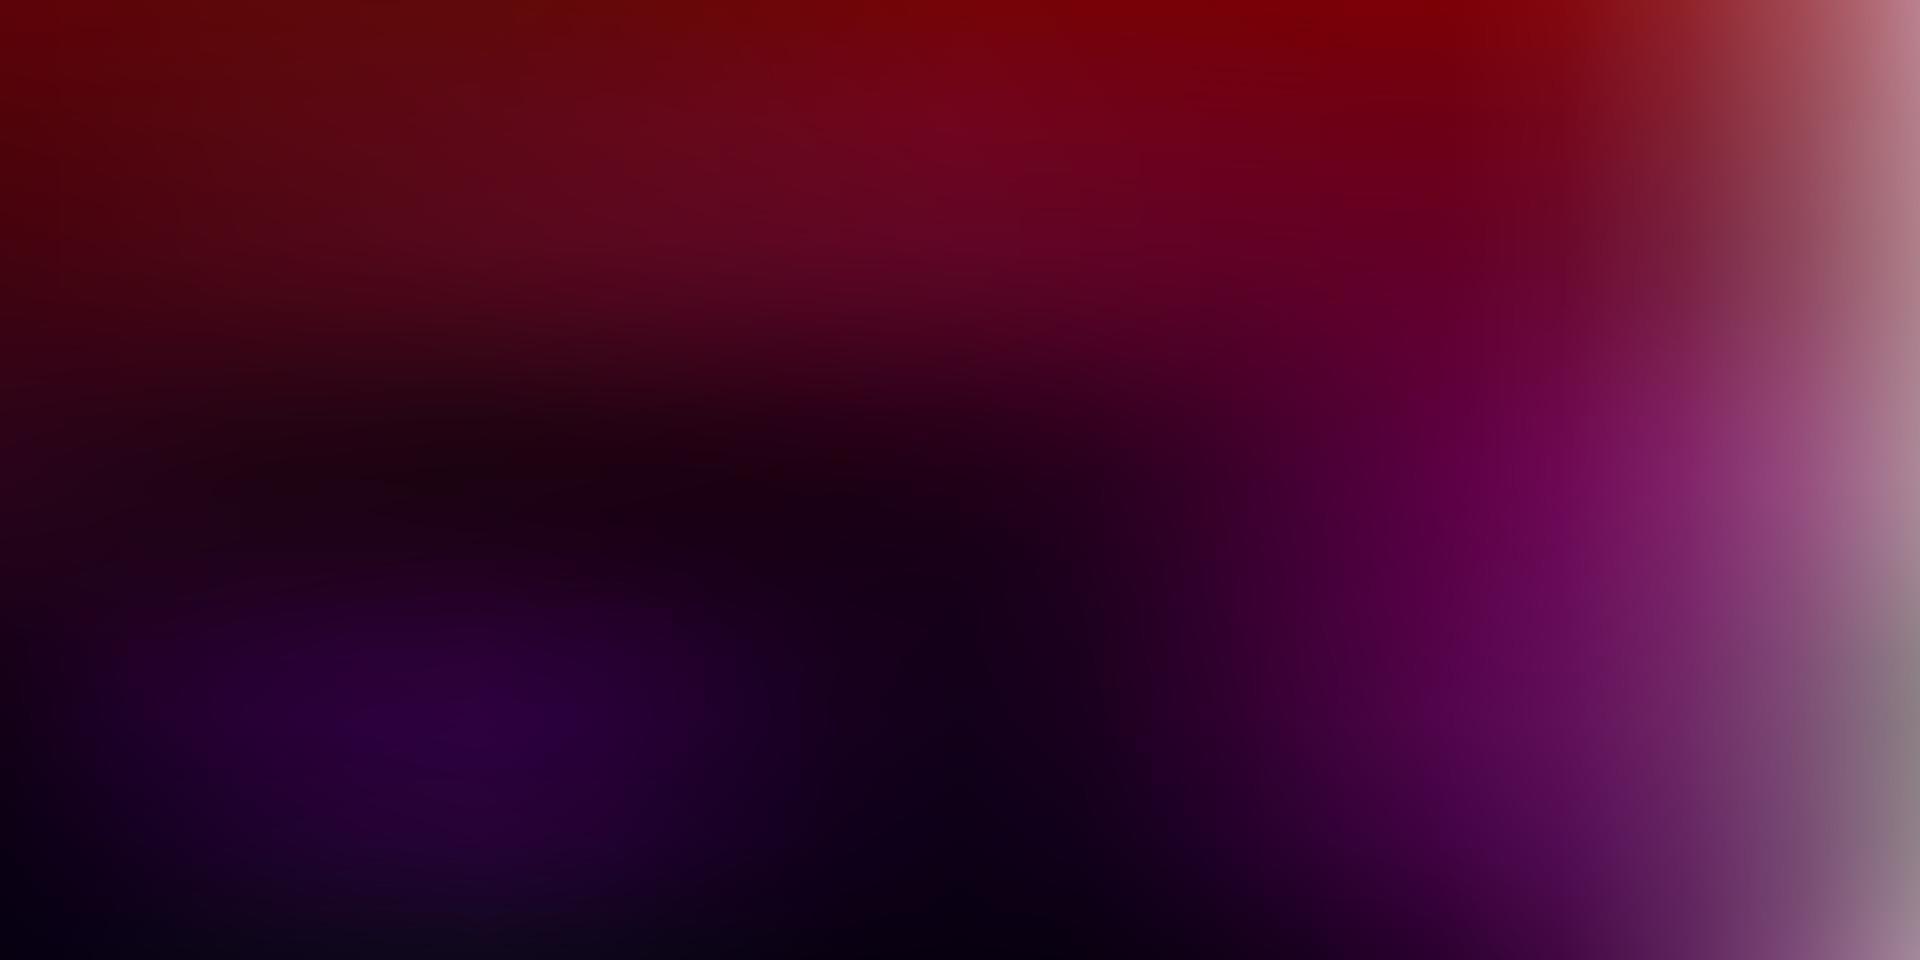 Dark pink, red vector abstract blur background.